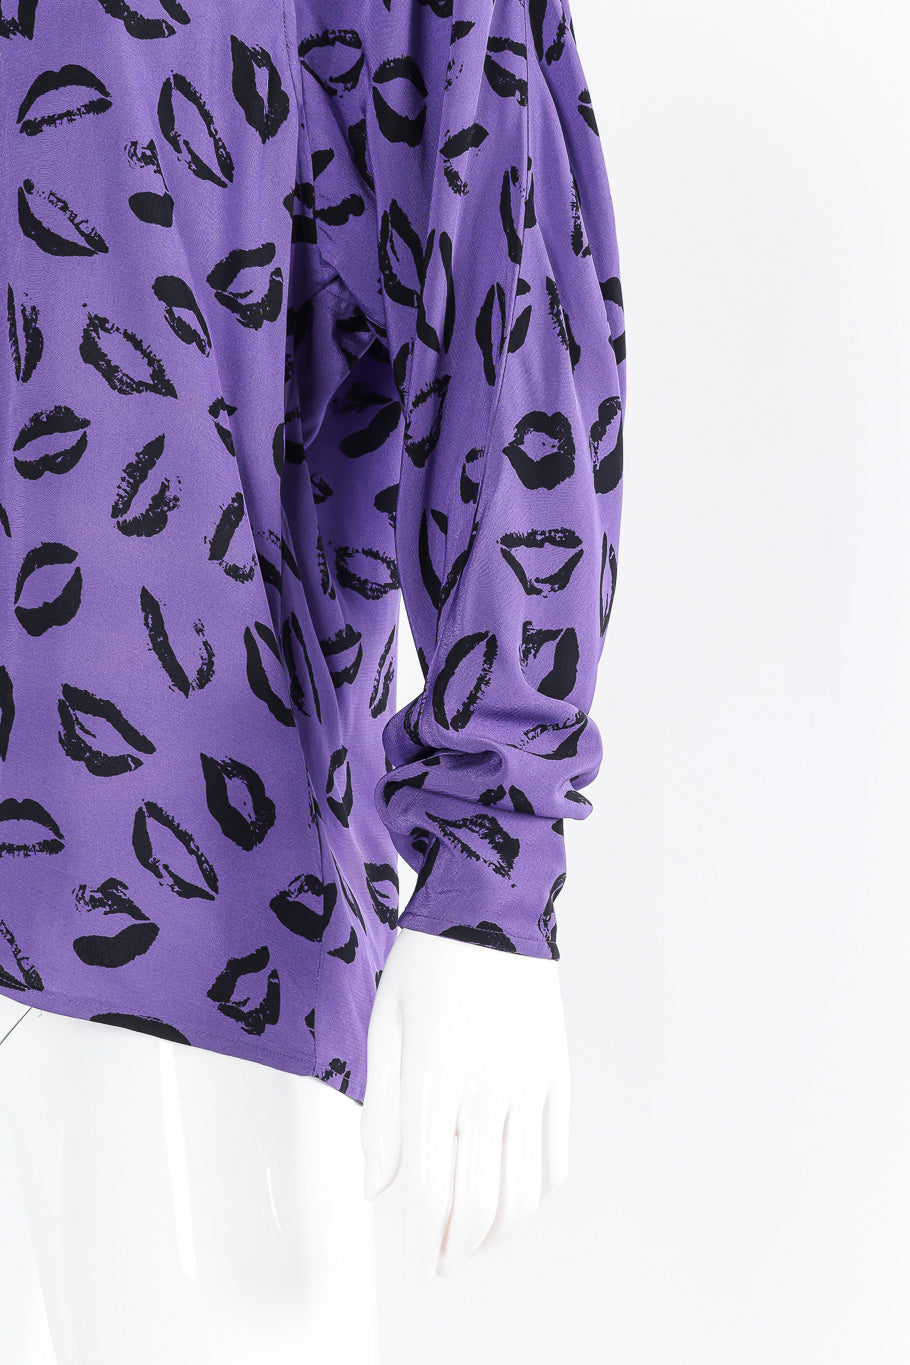 Lip blouse by Emanuel Ungaro mannequin sleeve @recessla